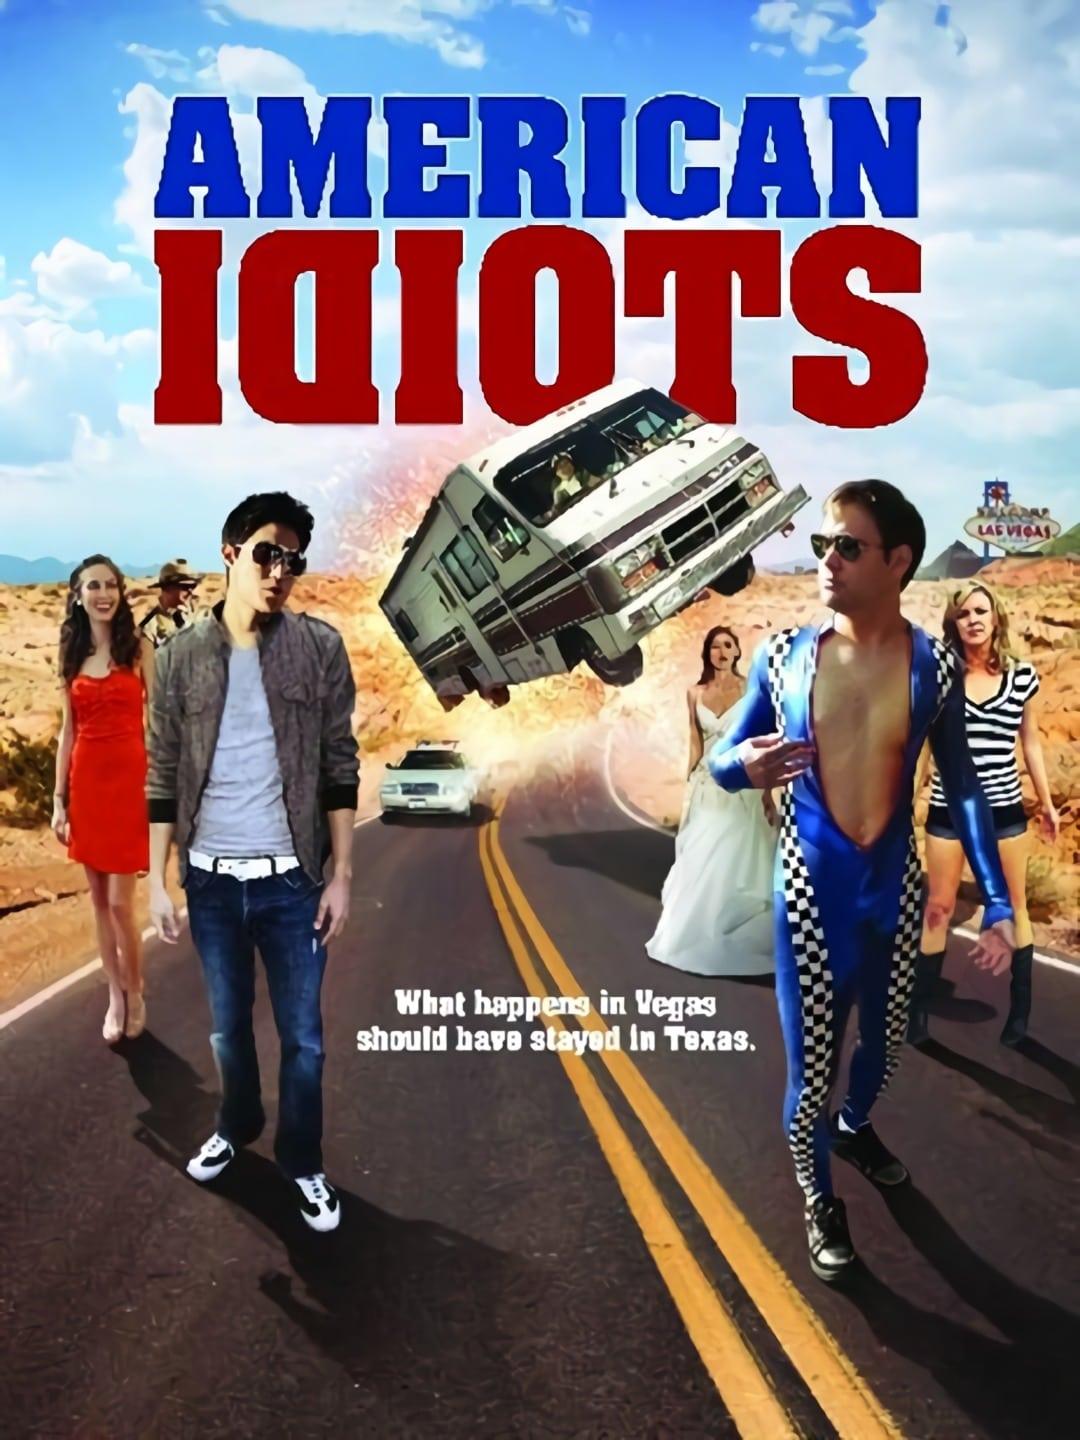 American Idiots poster